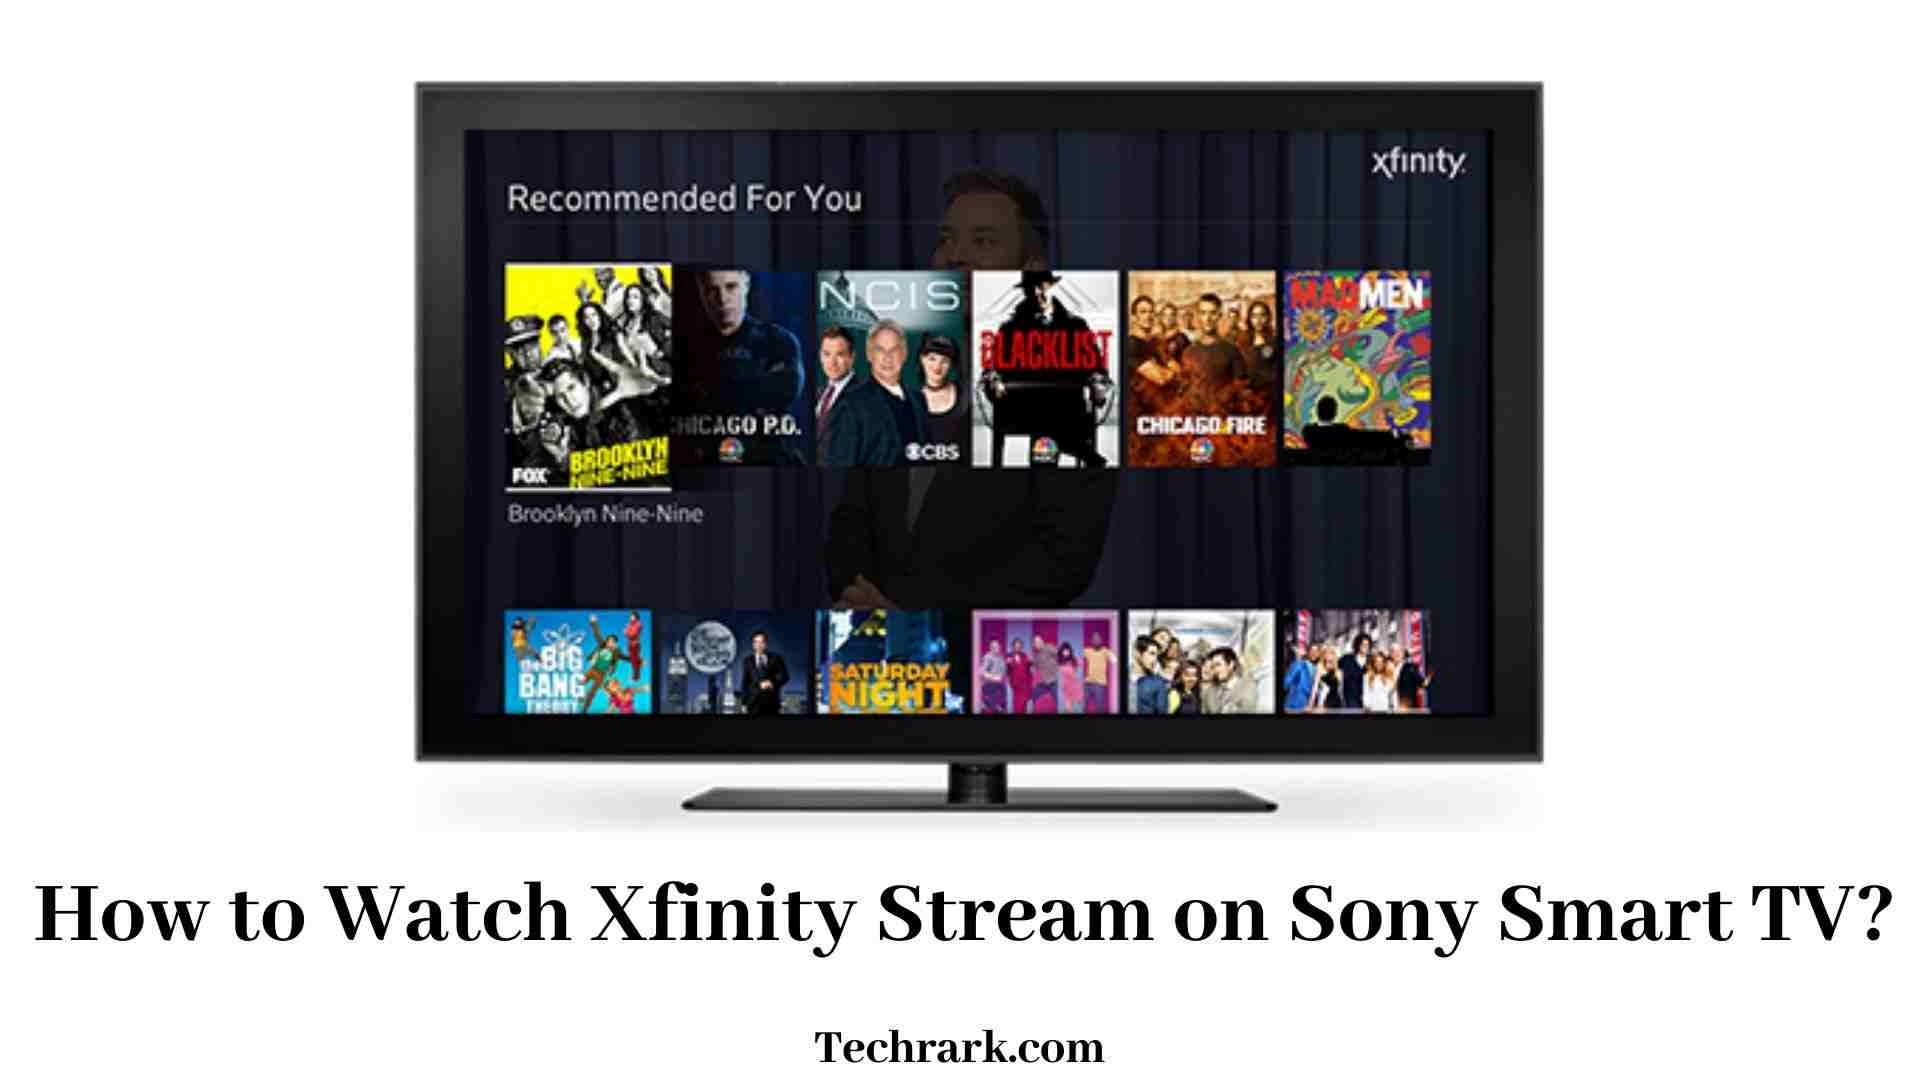 Xfinity Stream on Sony Smart TV